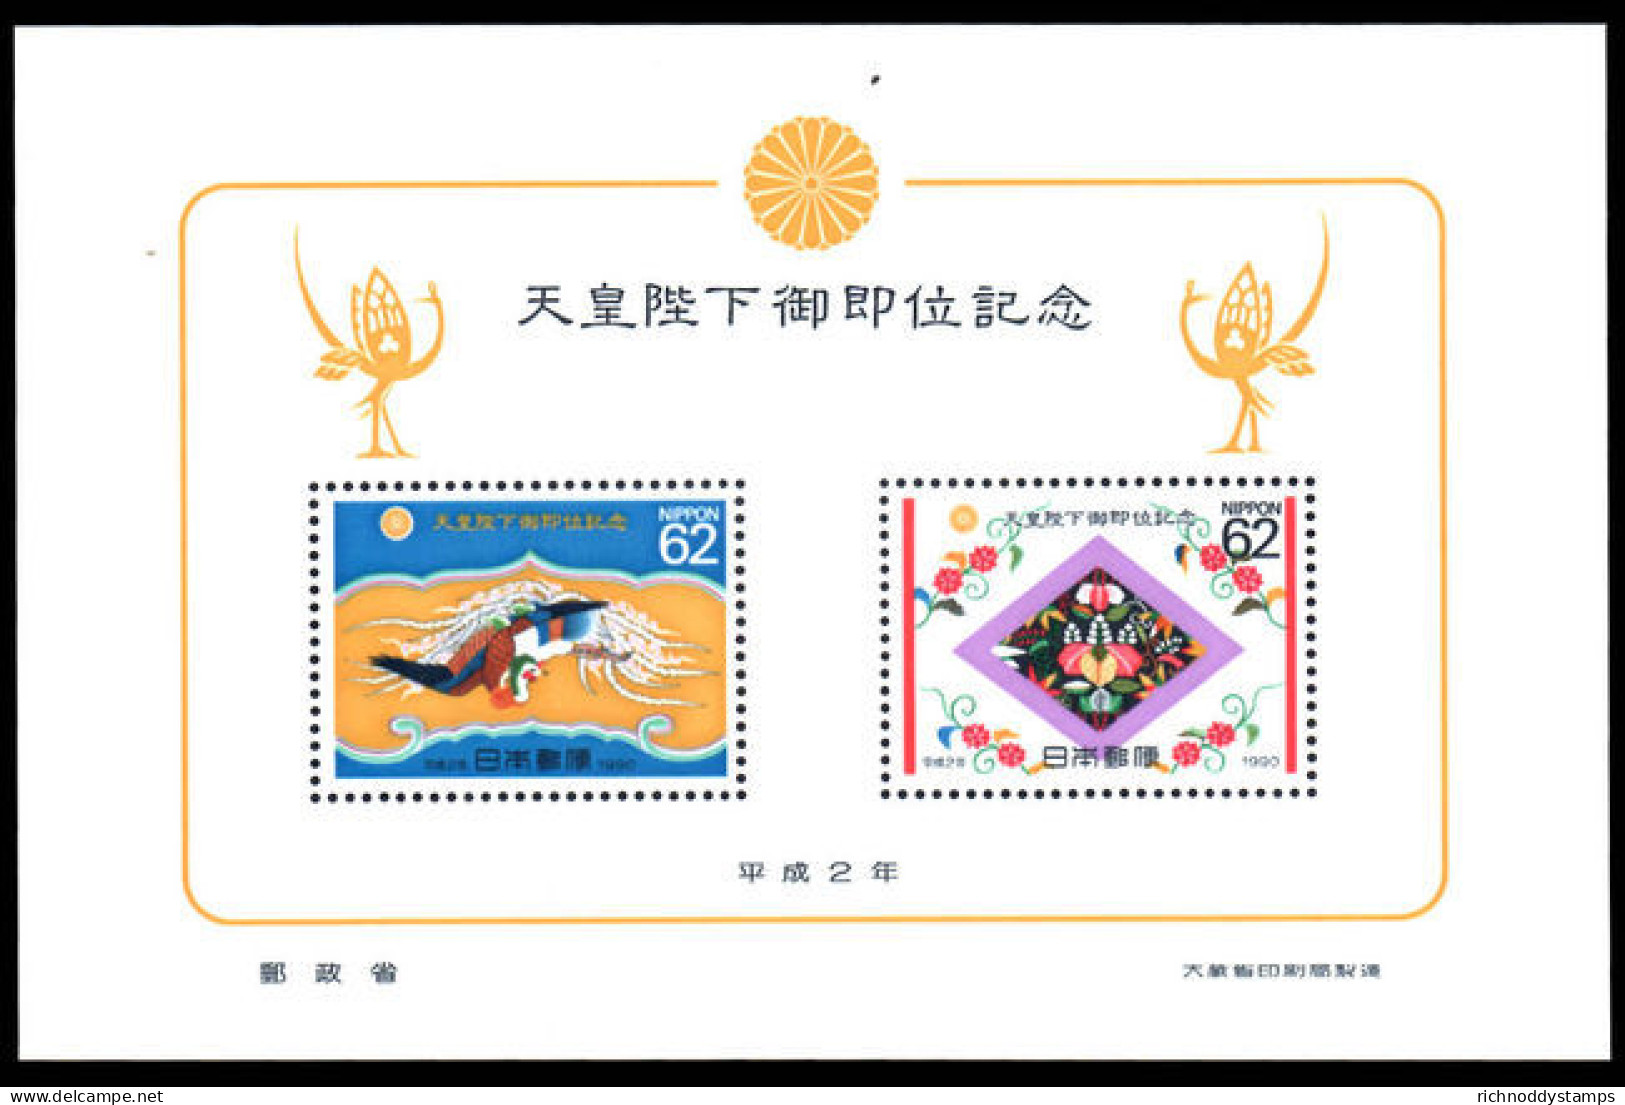 Japan 1990 Enthronement Of Emperor Souvenir Sheet Unmounted Mint. - Unused Stamps